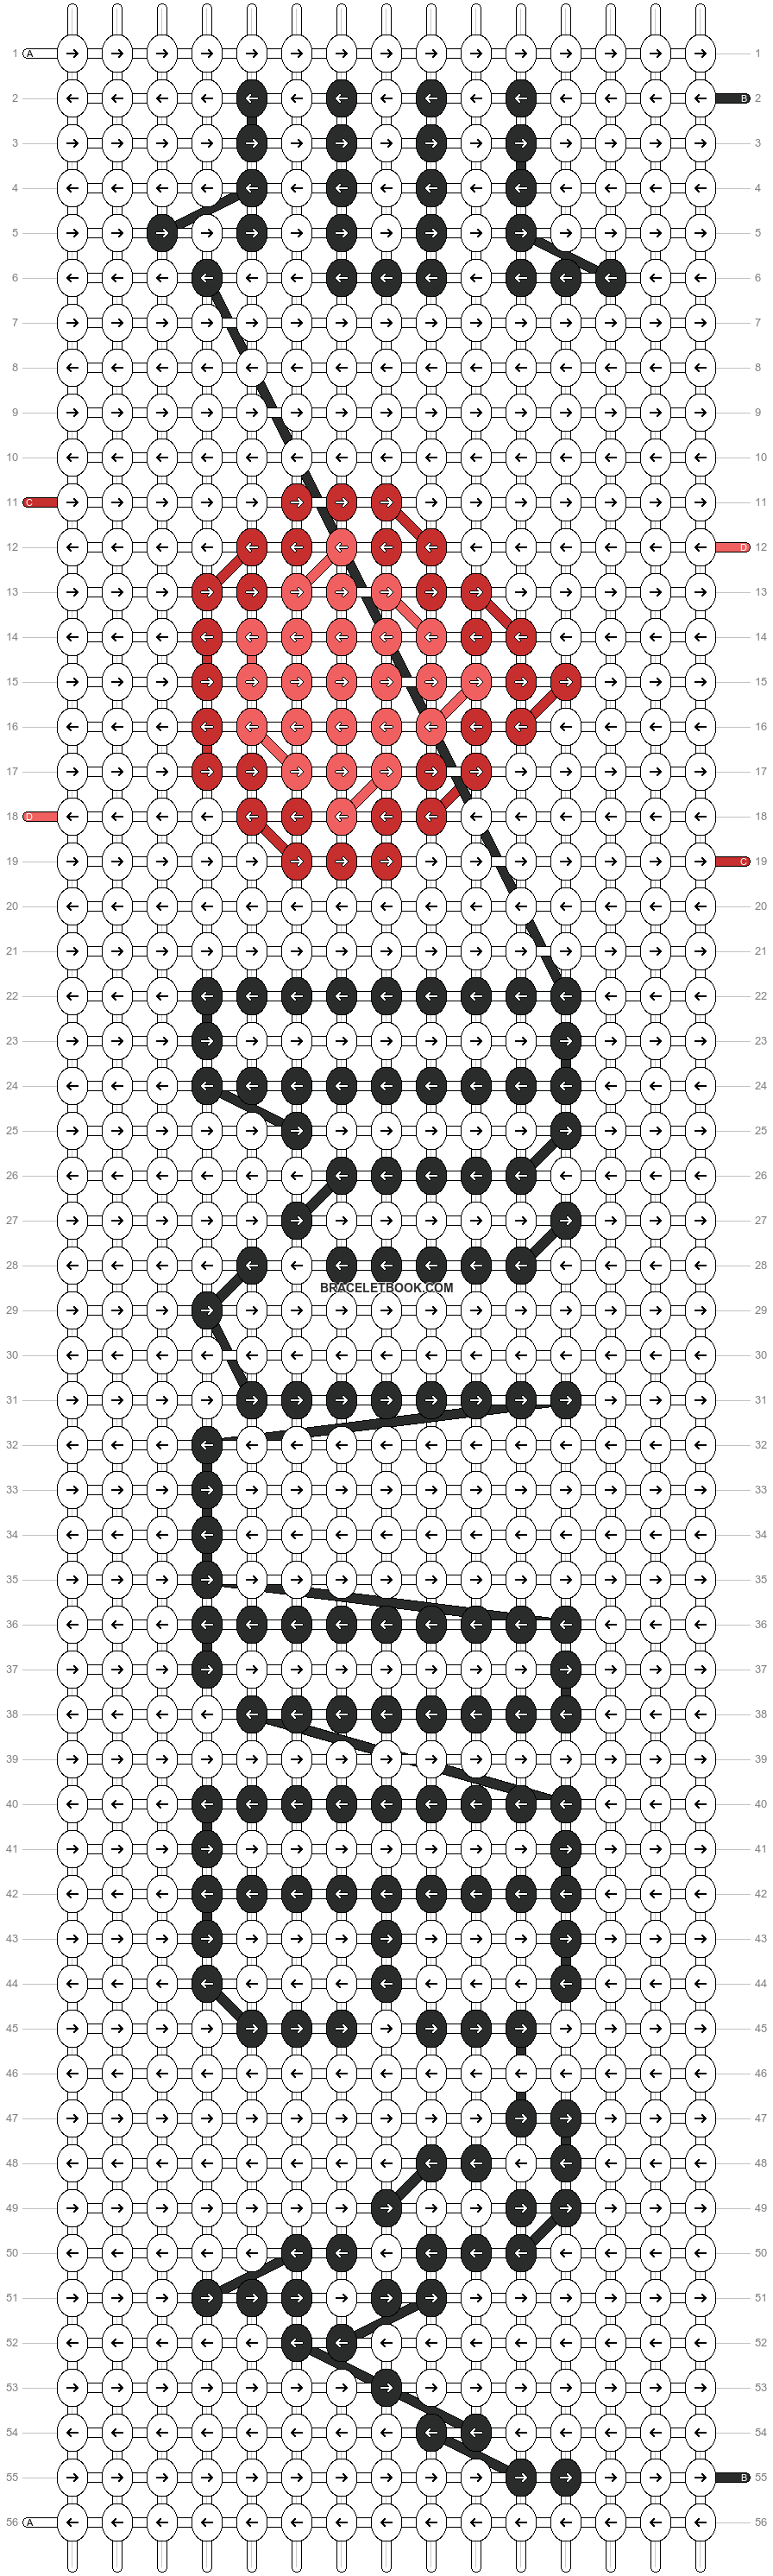 Alpha pattern #95204 pattern